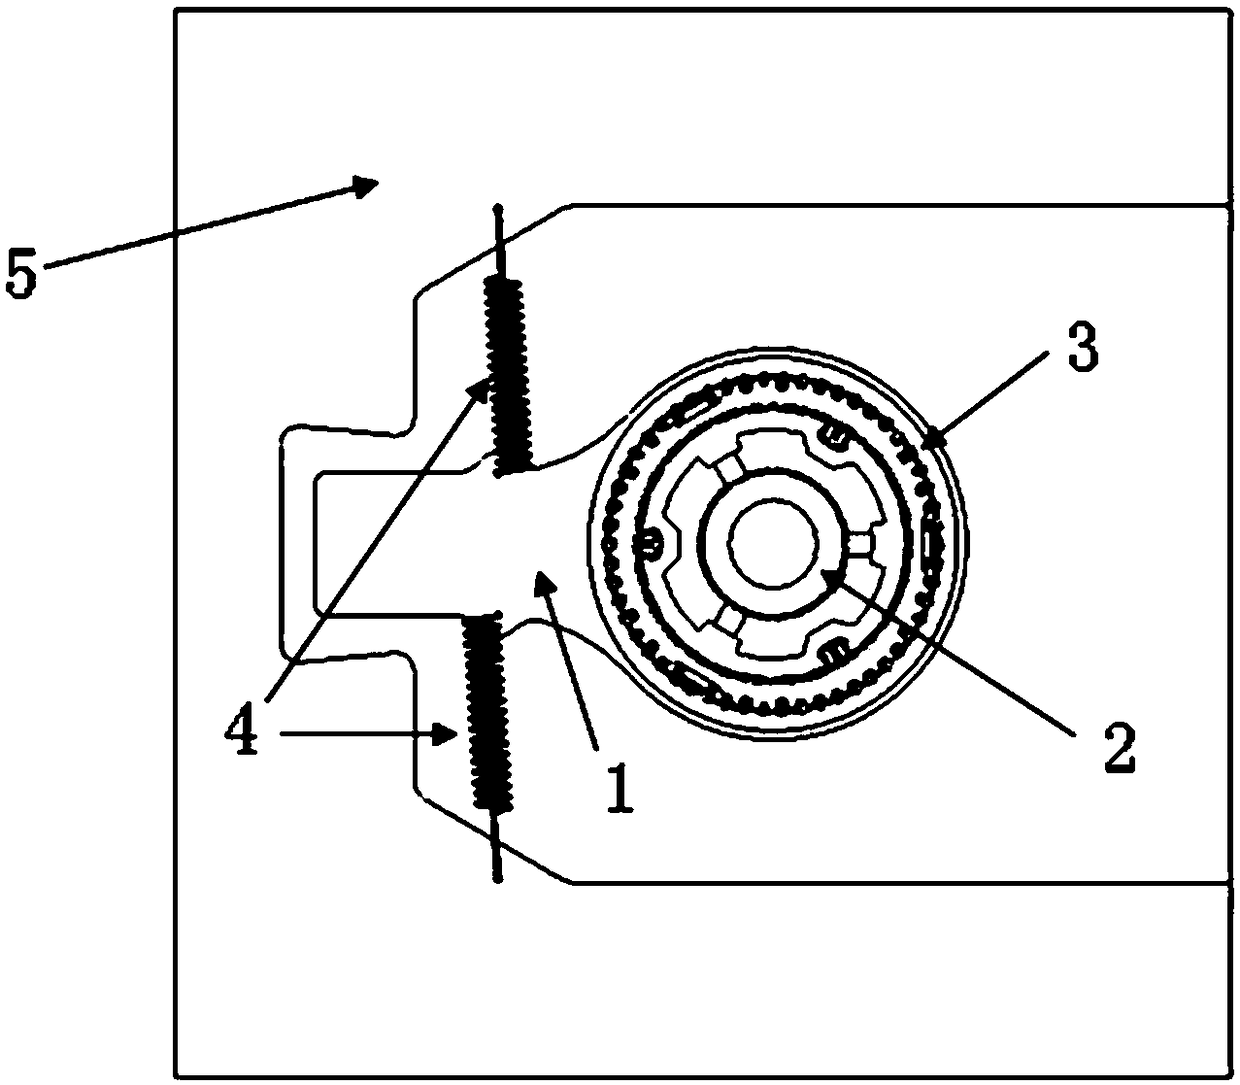 A gearbox shaft locking structure